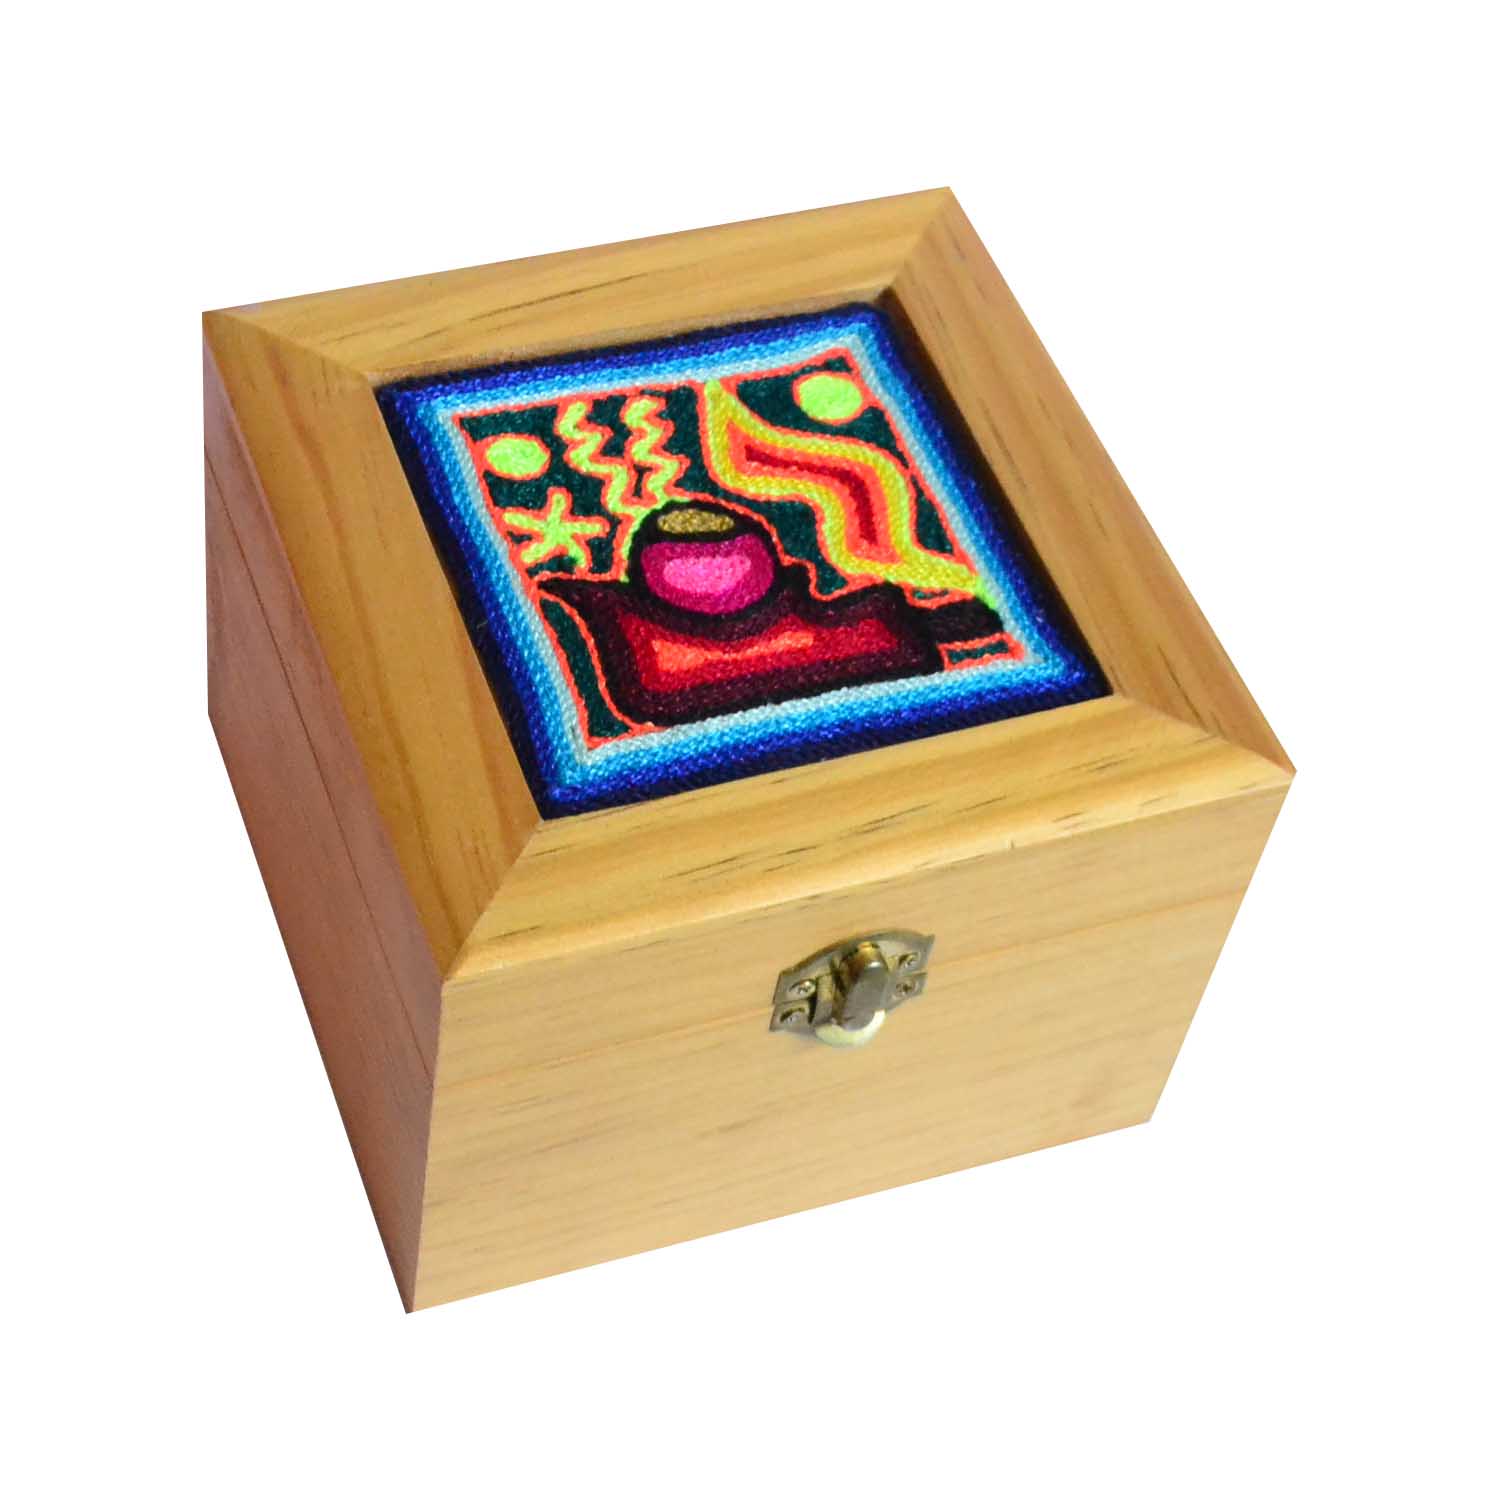 Caja de regalo - Box